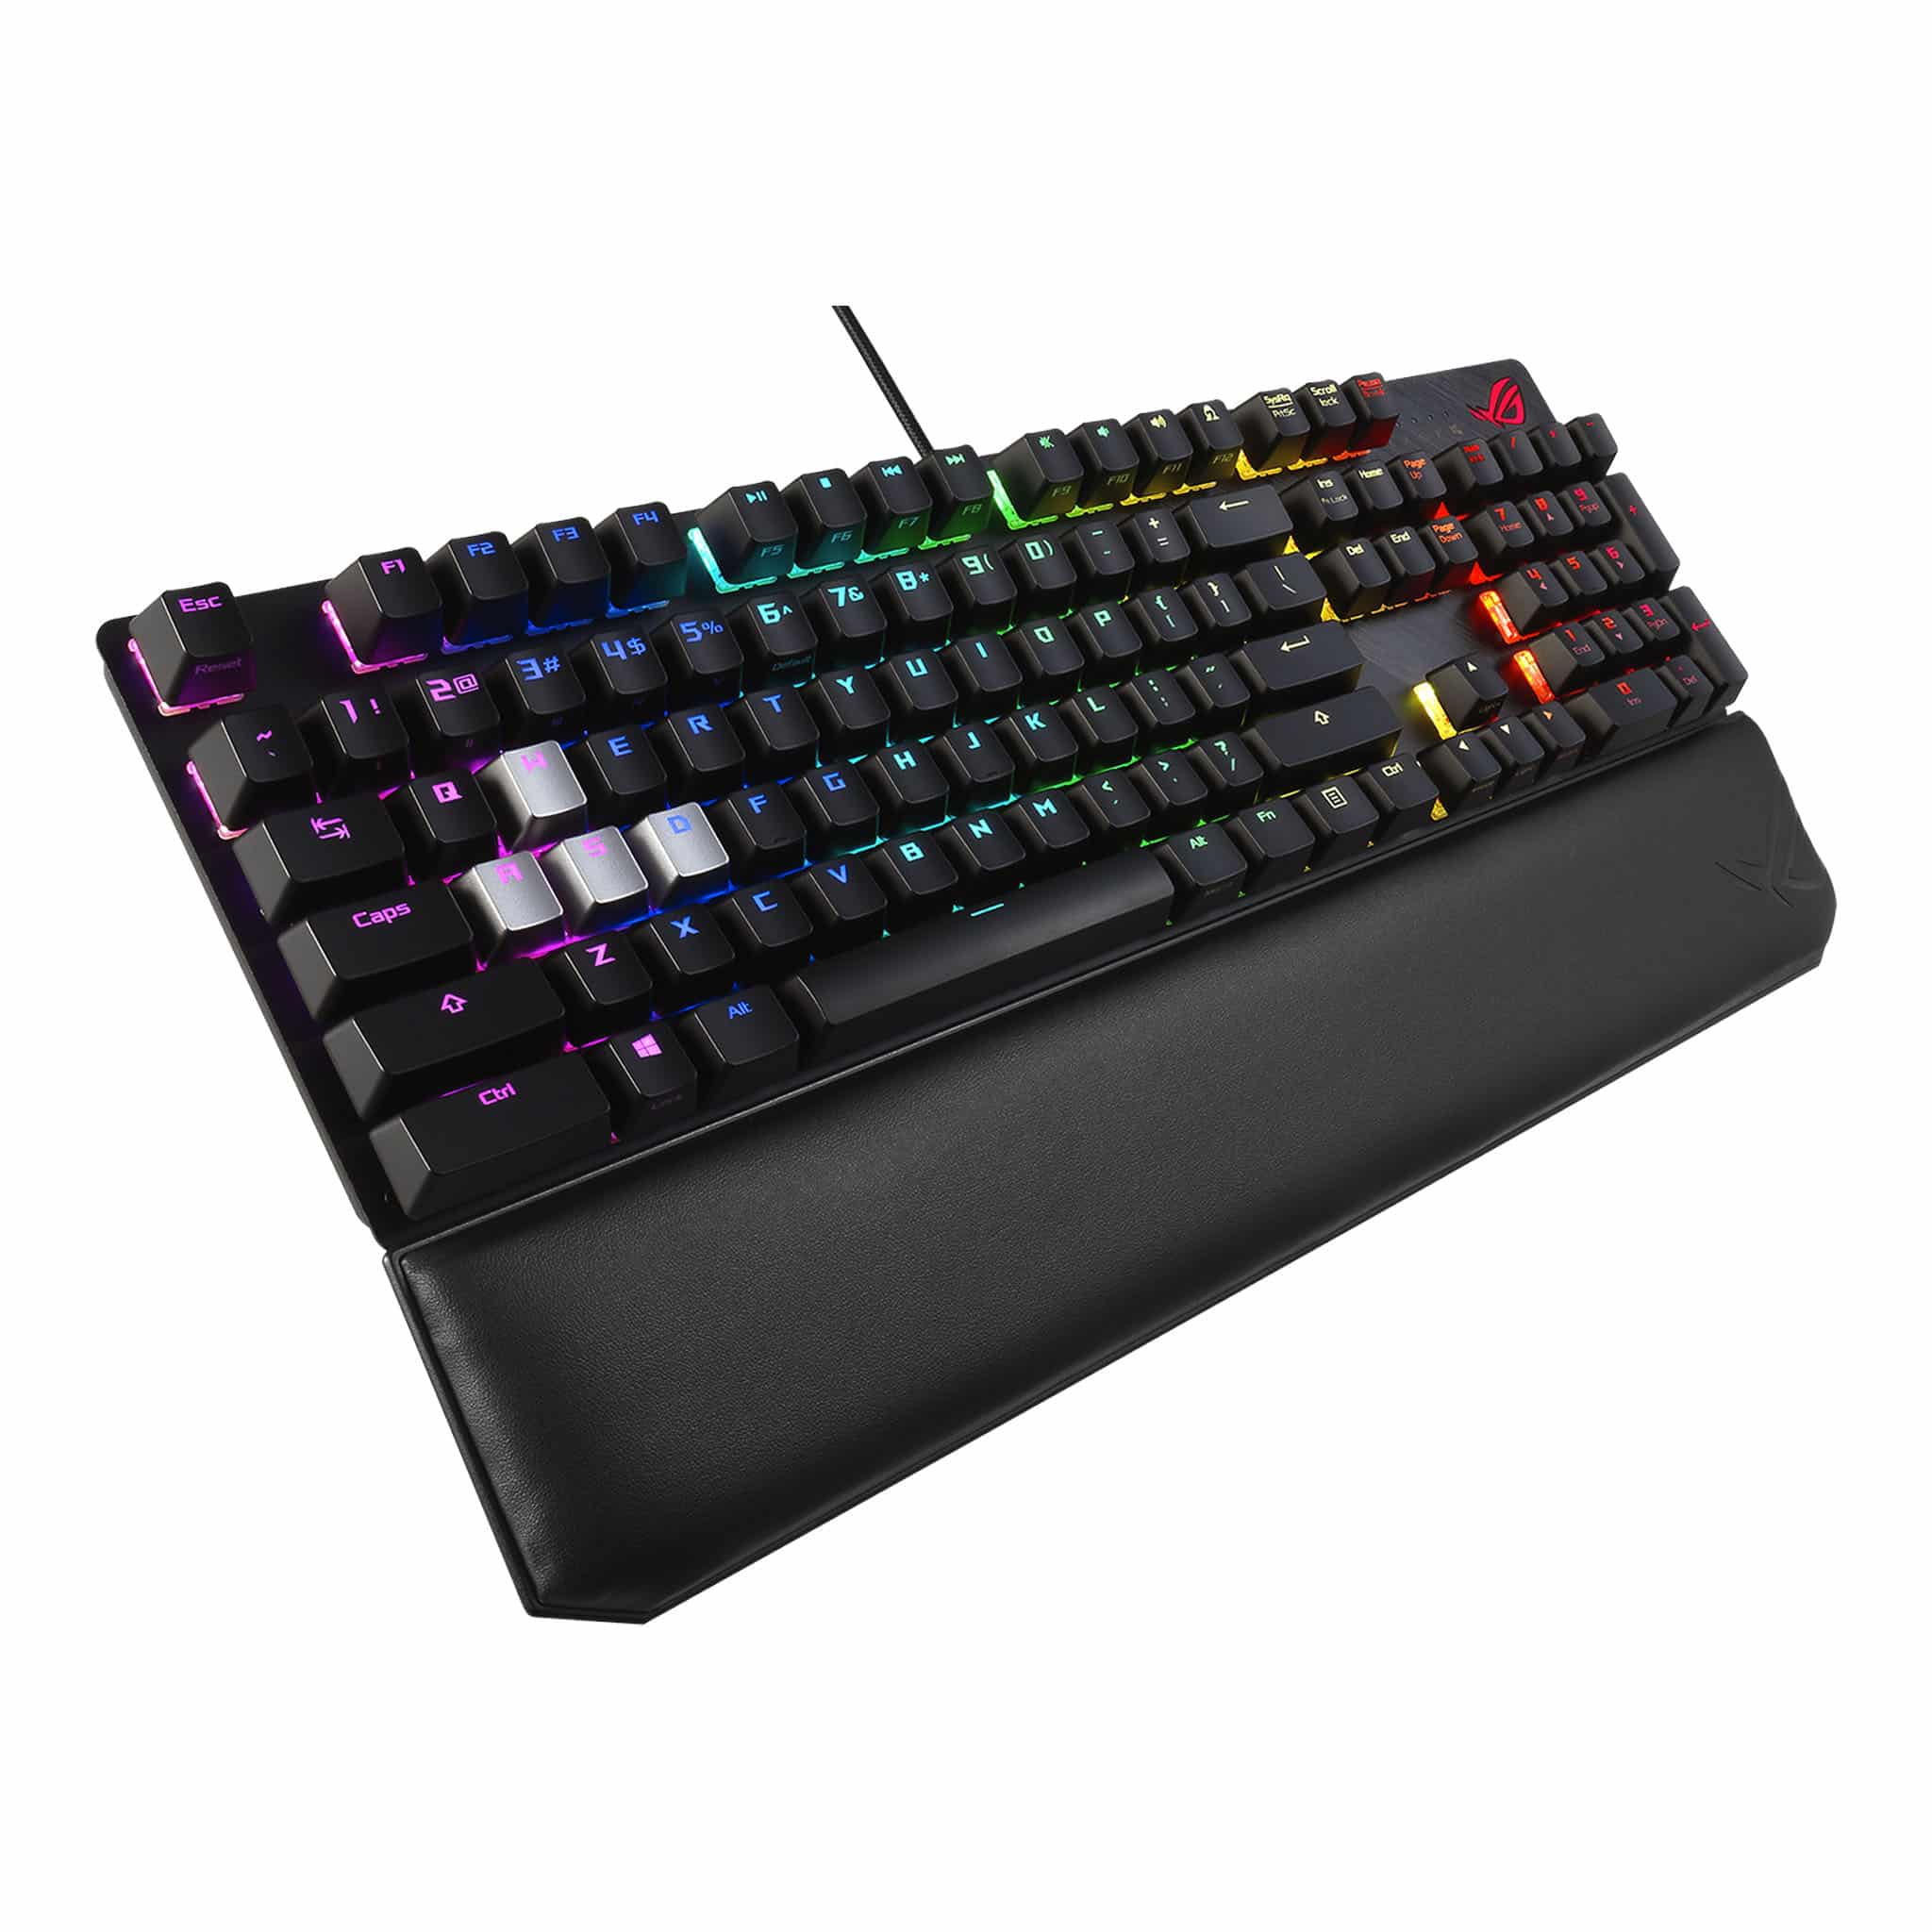 ASUS ROG Strix Scope NX Deluxe RGB Mechanical Gaming Keyboard